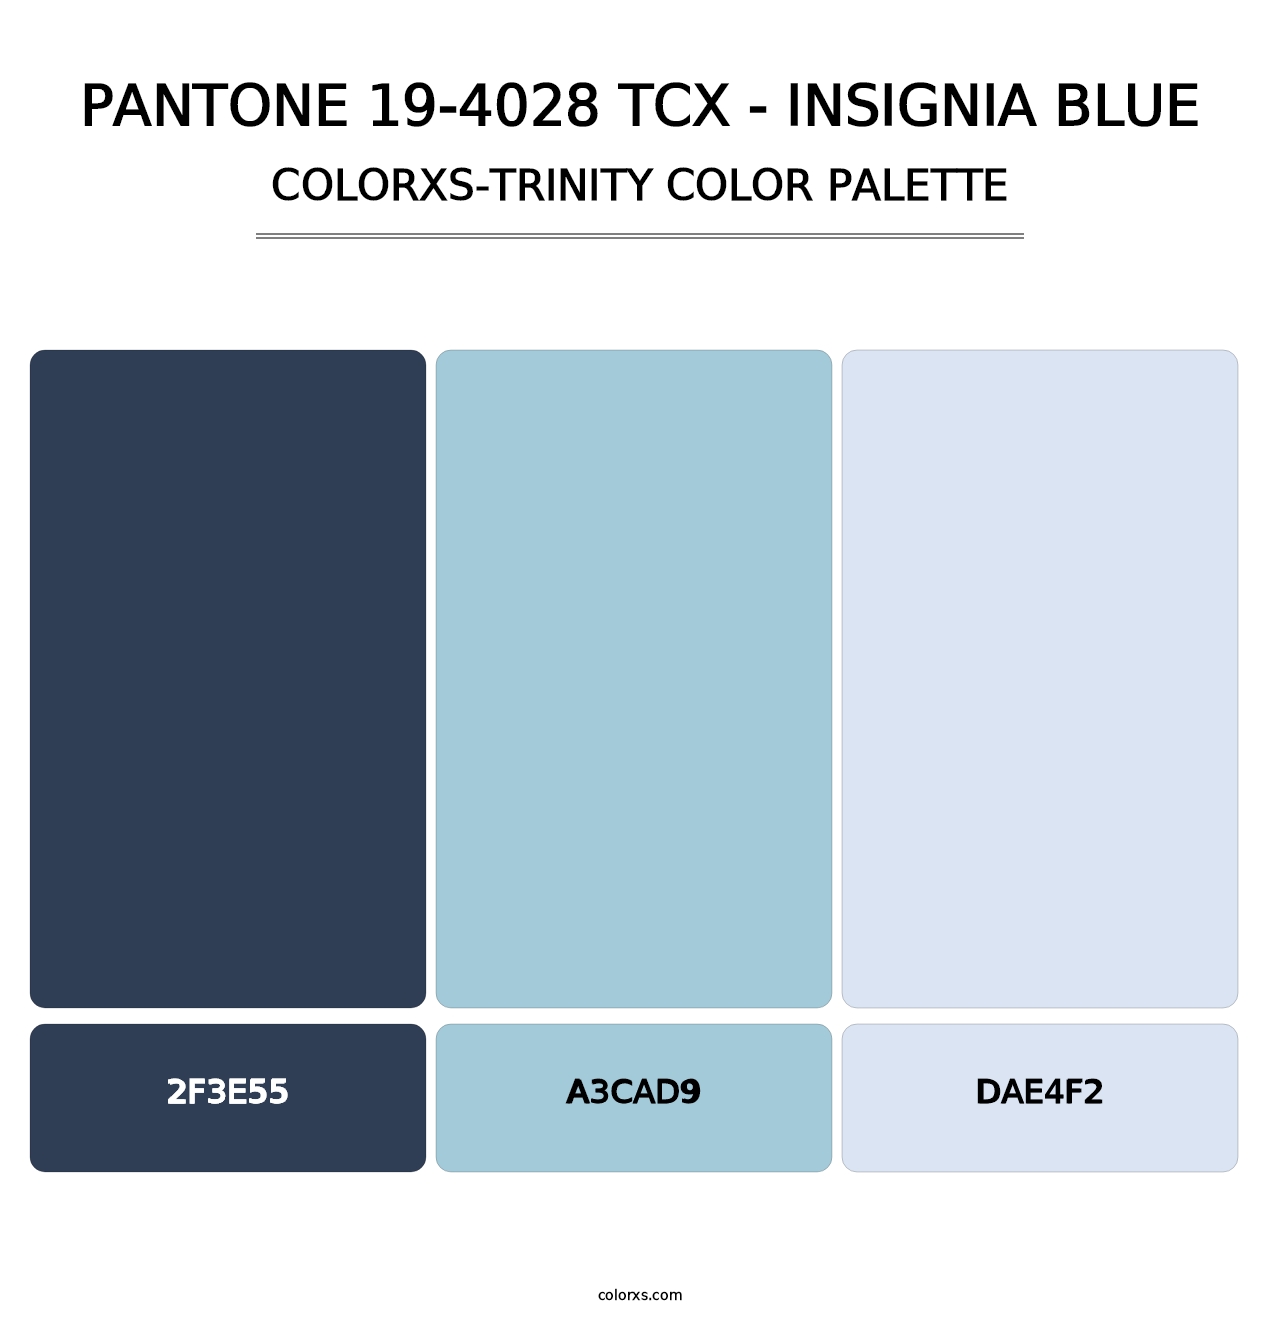 PANTONE 19-4028 TCX - Insignia Blue - Colorxs Trinity Palette